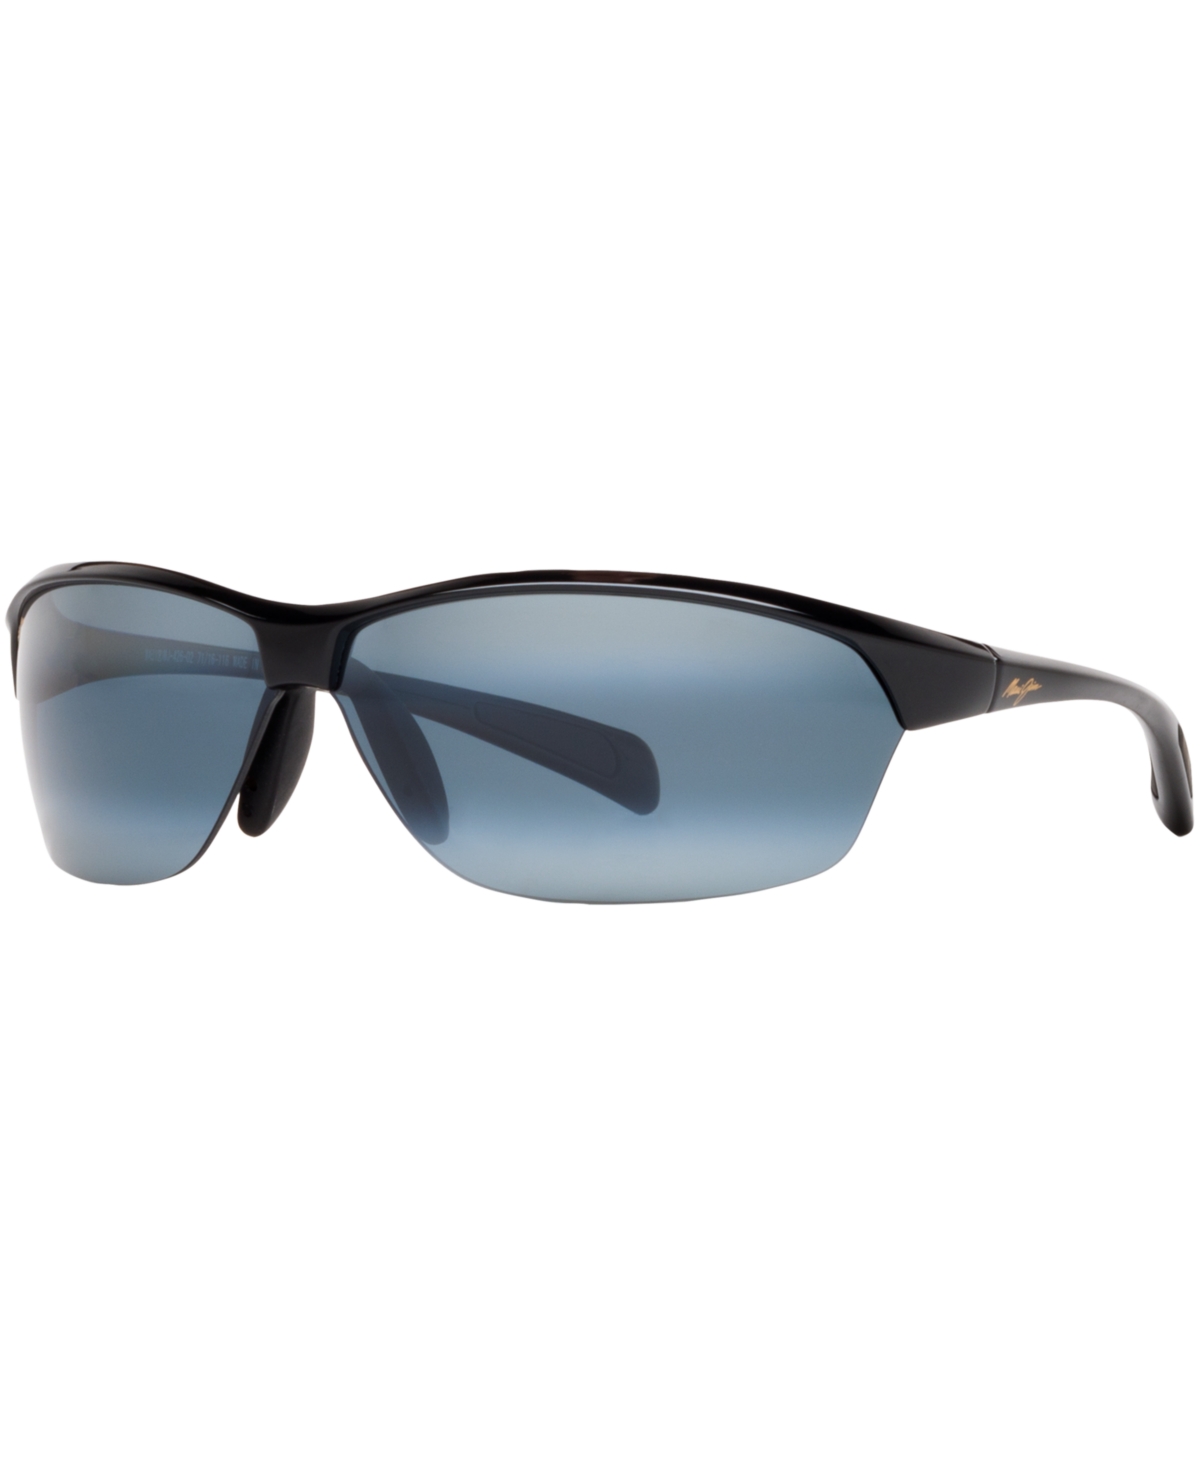 Polarized Hot Sands Polarized Sunglasses, MJ000384 - Black/Grey